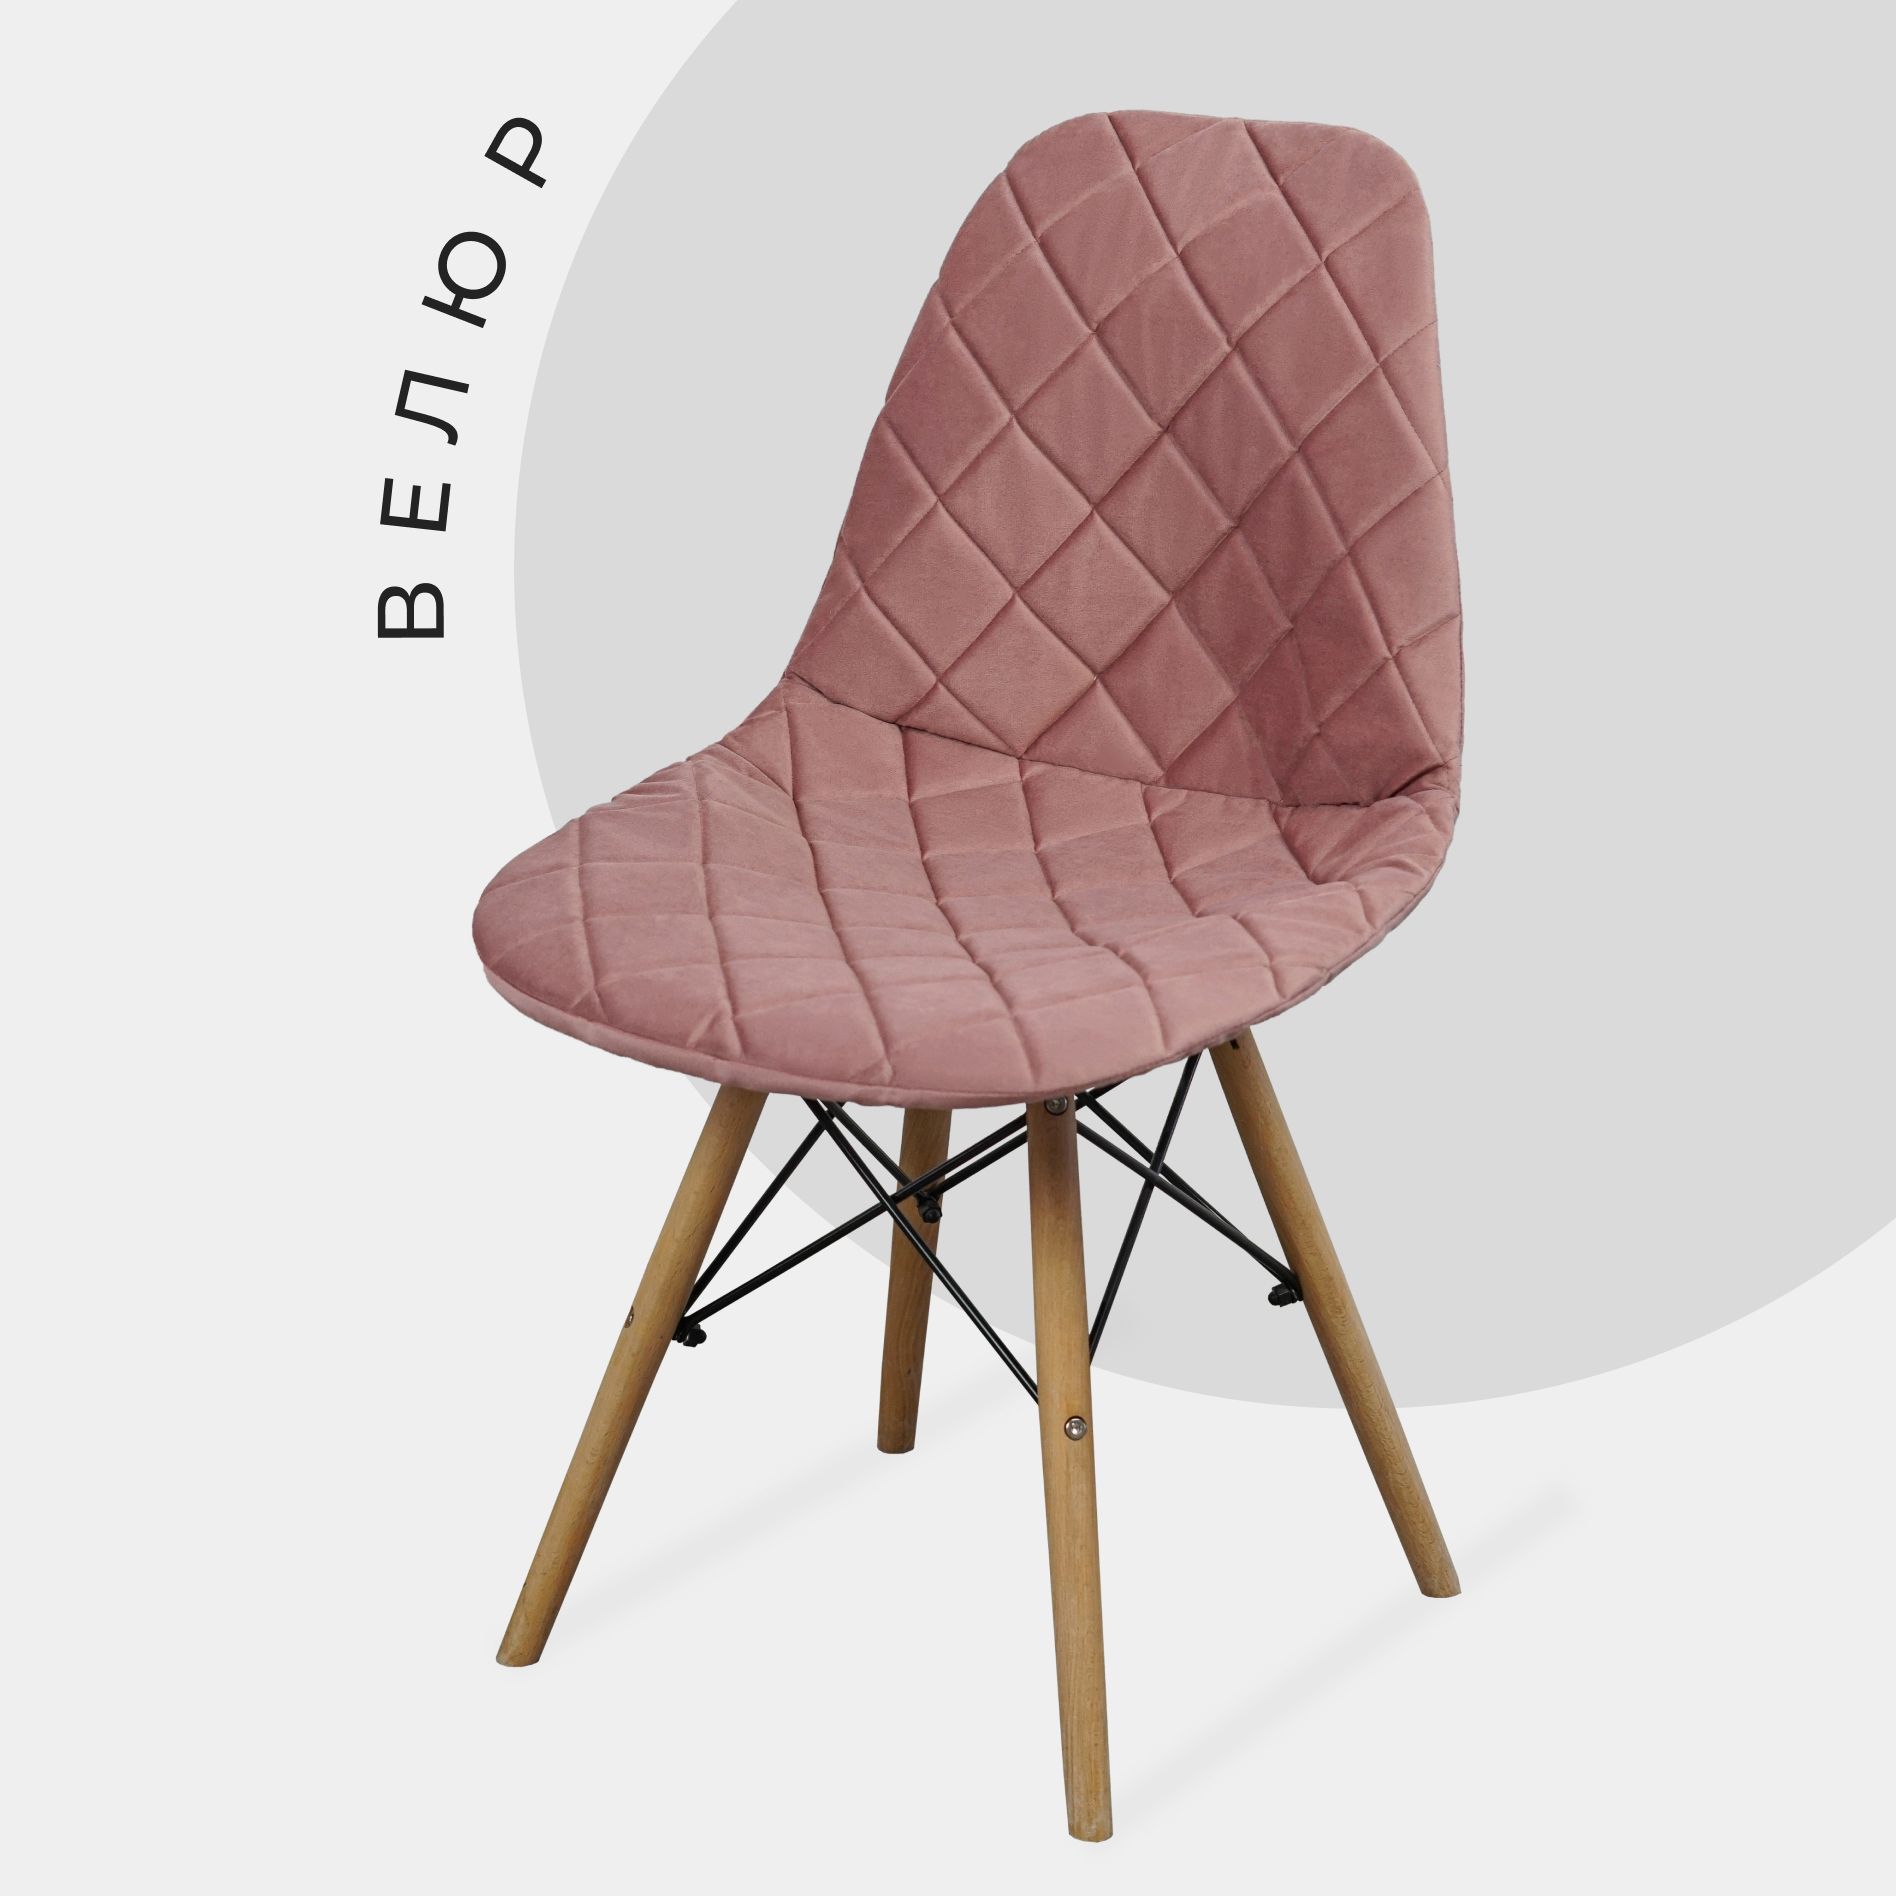 Чехол на стул со спинкой Eames из велюра, 40х46см, темно-розовый